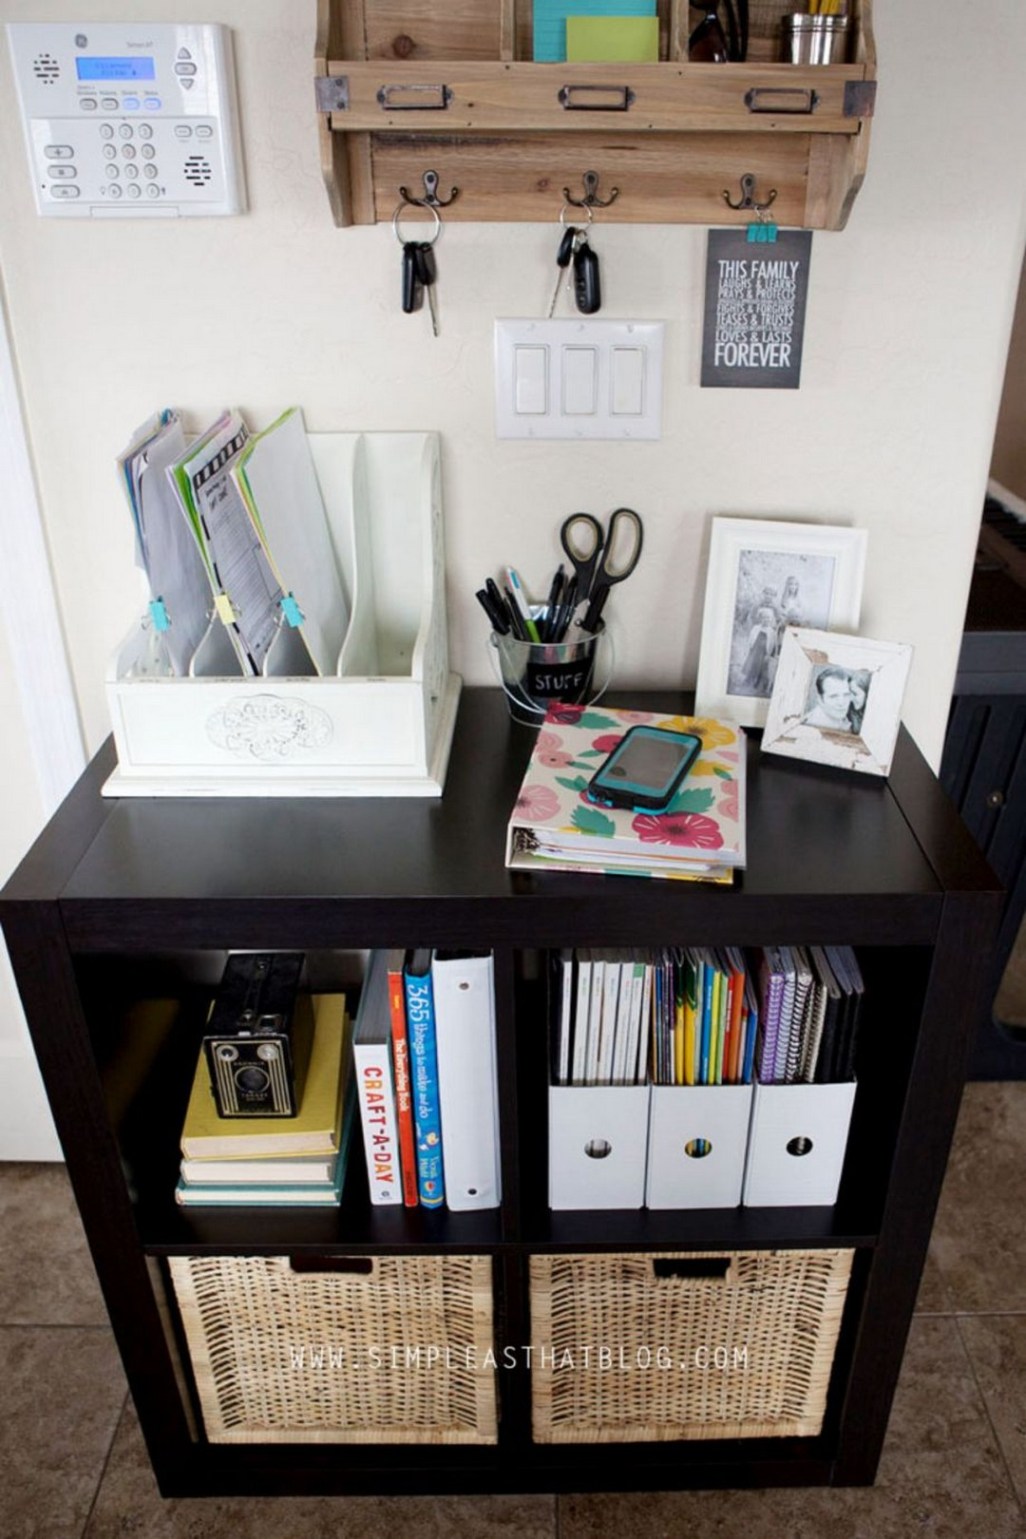 Genius small apartment storage and organization ideas 1.jpg